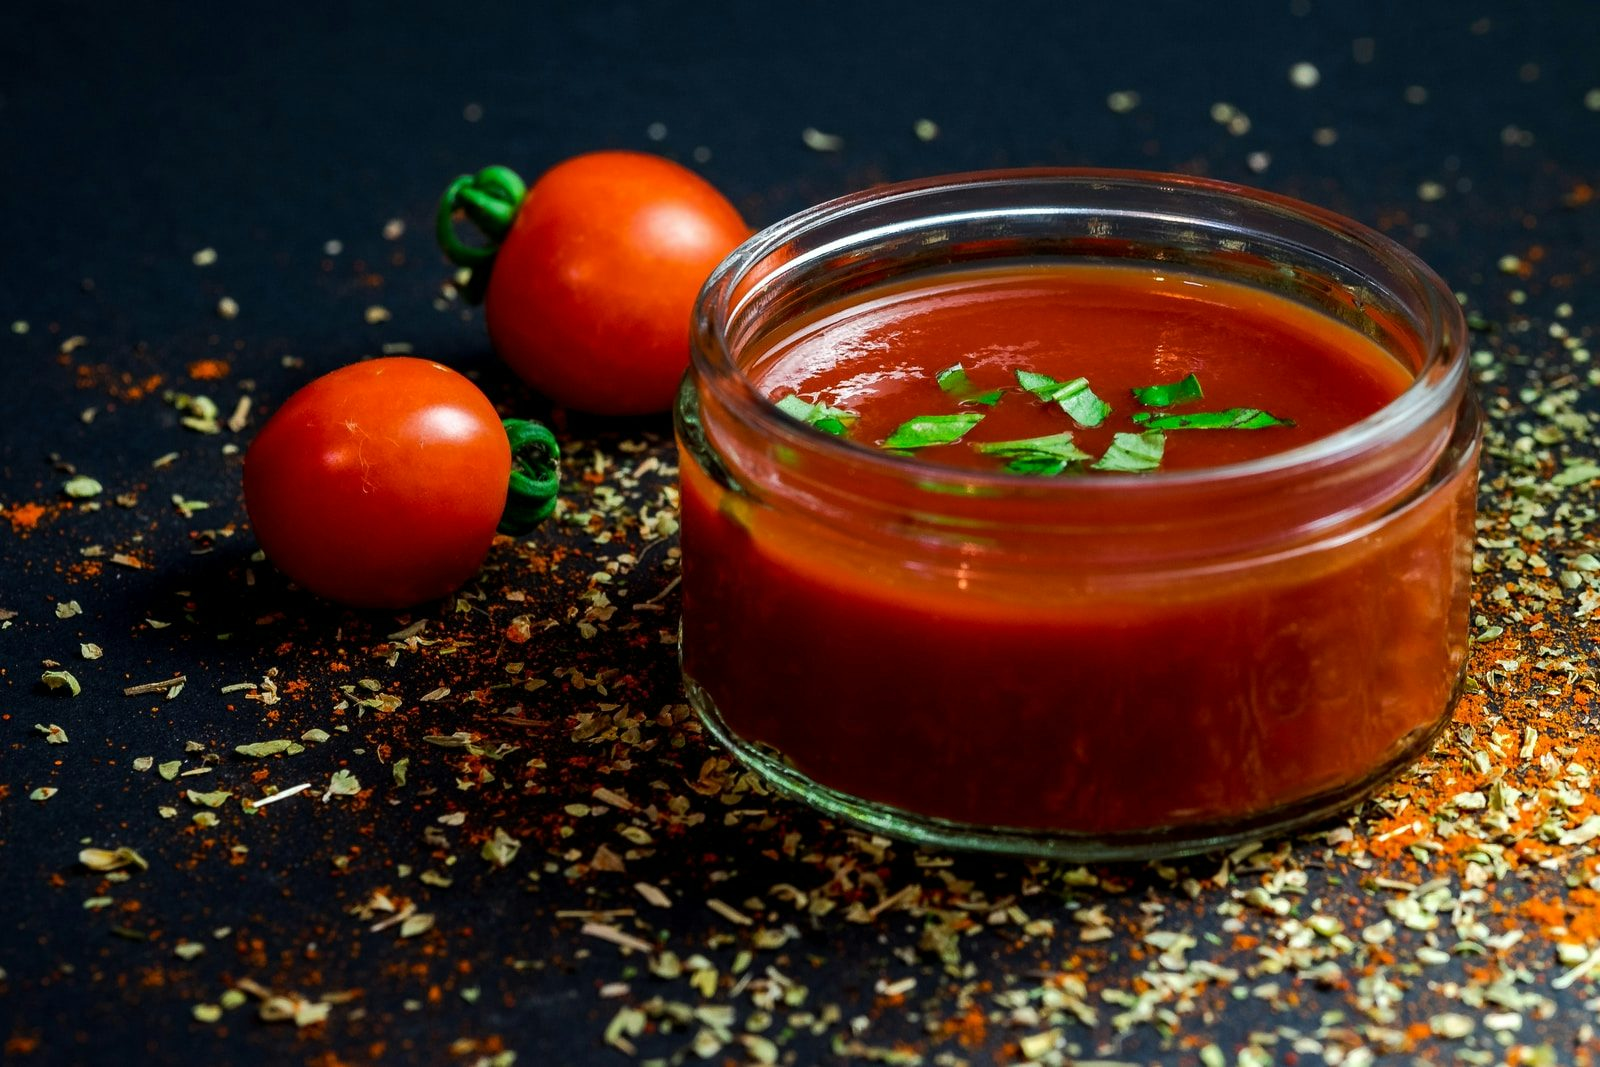 Tomato sauce filling